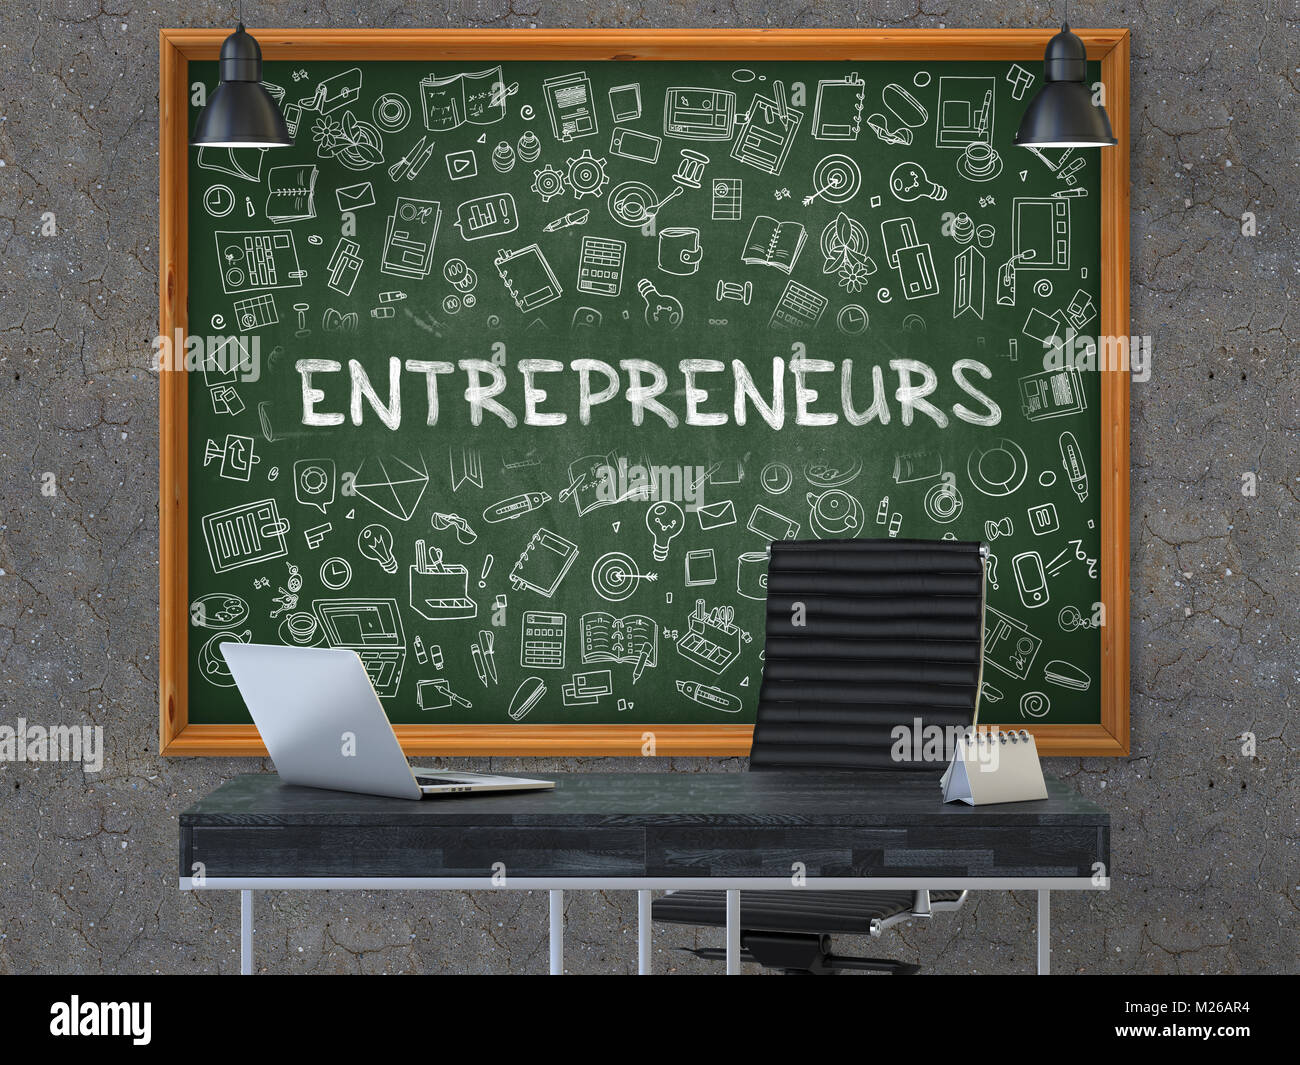 Entrepreneurs Concept. Doodle Icons on Chalkboard. 3d Stock Photo